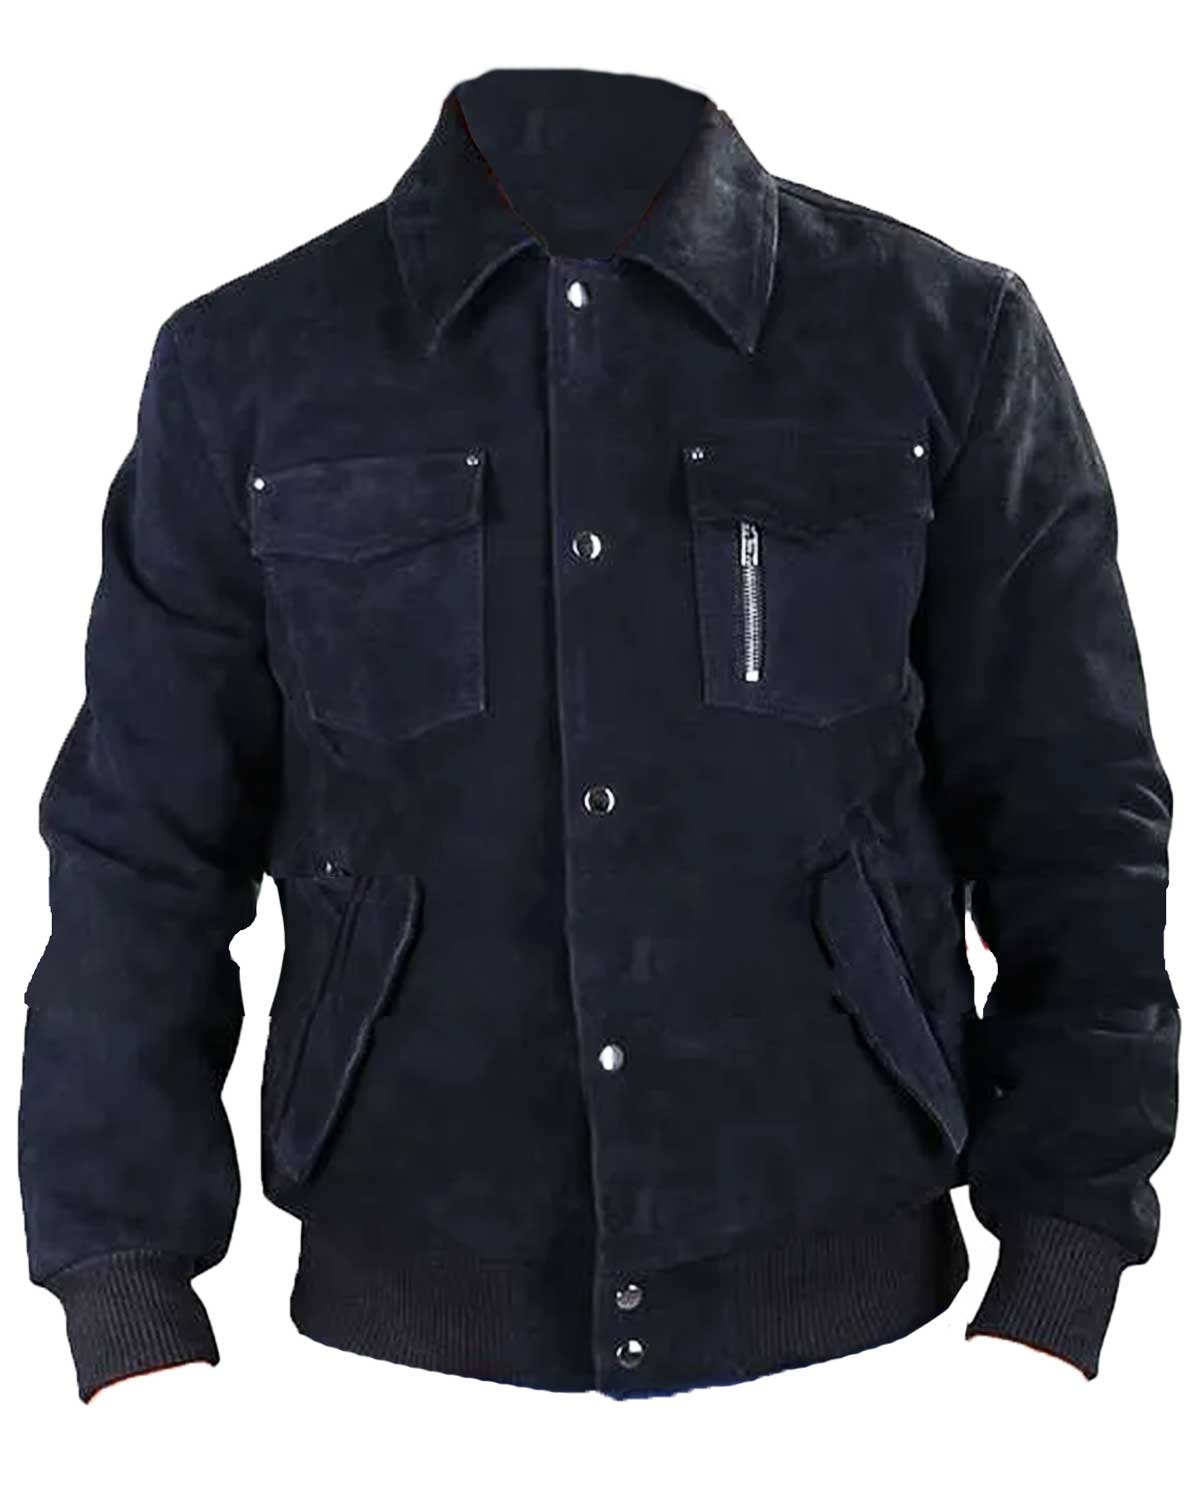 Mark Wahlberg Daddys Home 2 Leather Jacket | Elite Jacket